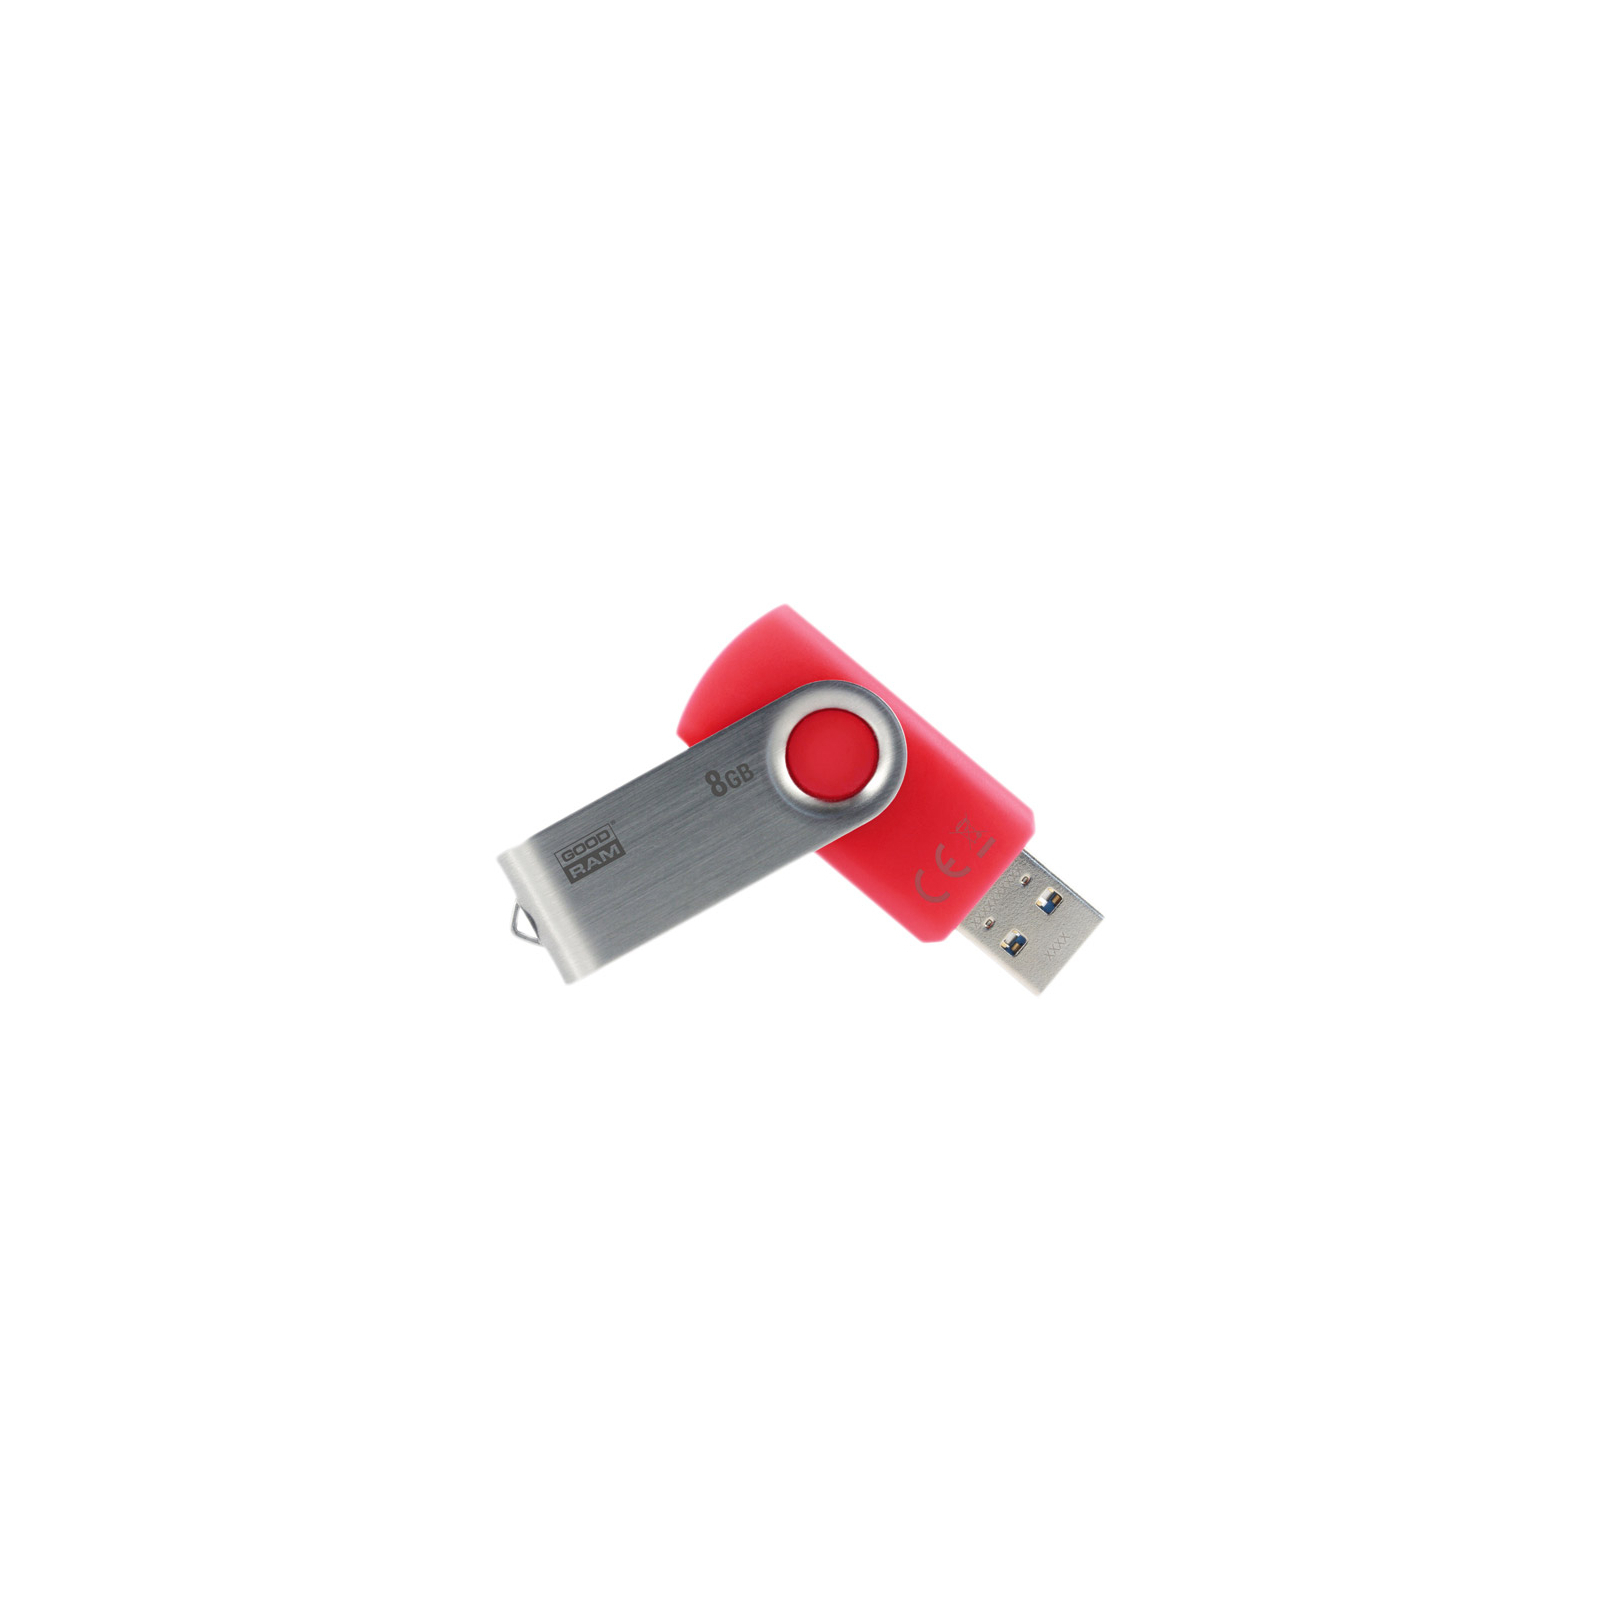 USB флеш накопитель Goodram 8GB UTS3 Twister Red USB 3.0 (UTS3-0080R0R11) изображение 2